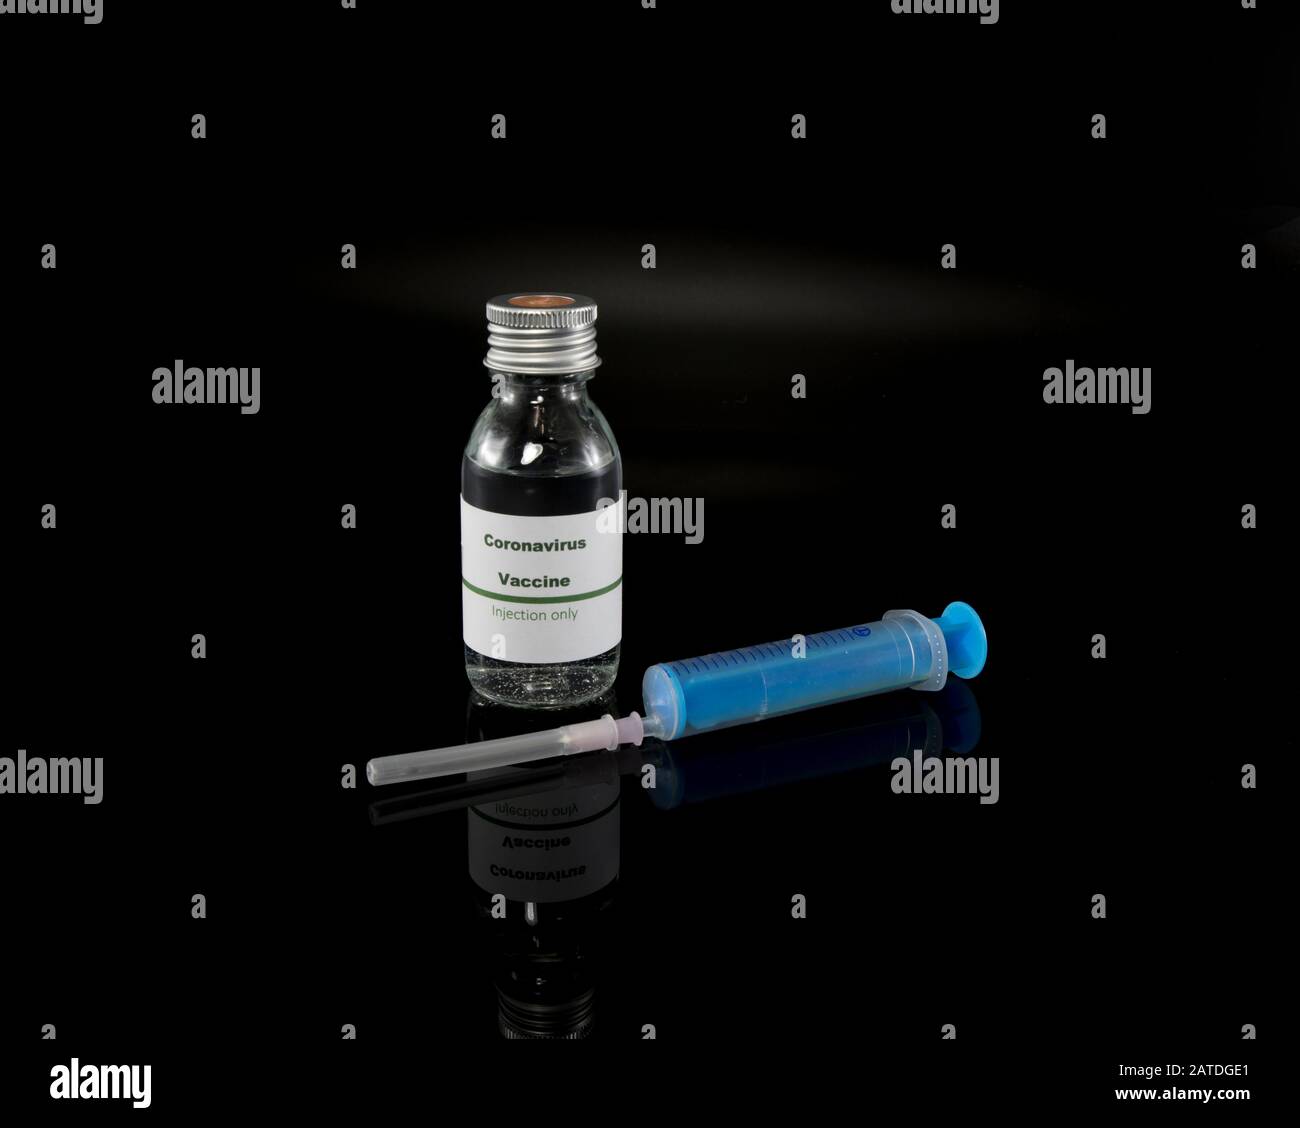 Coronavirus vaccine vial with injection syringe isolated on black background Stock Photo